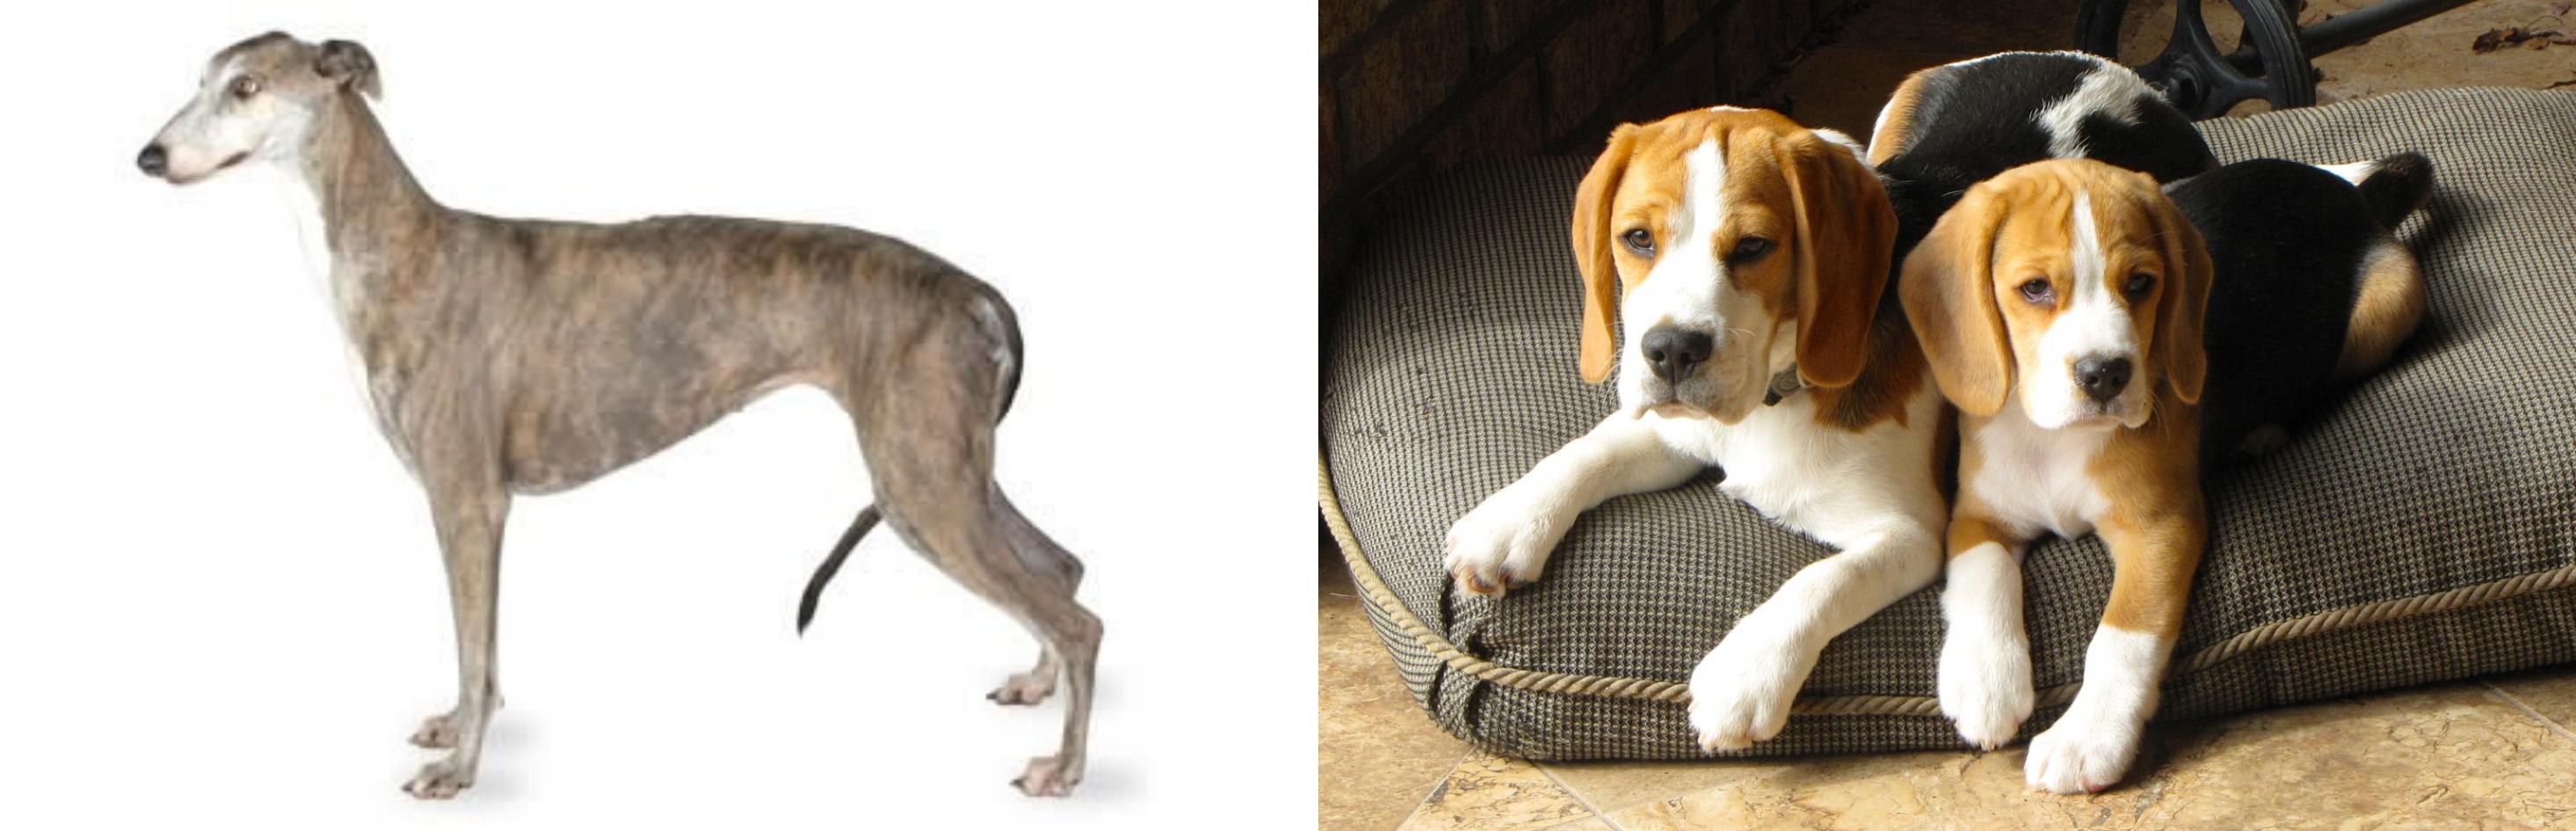 beagle greyhound